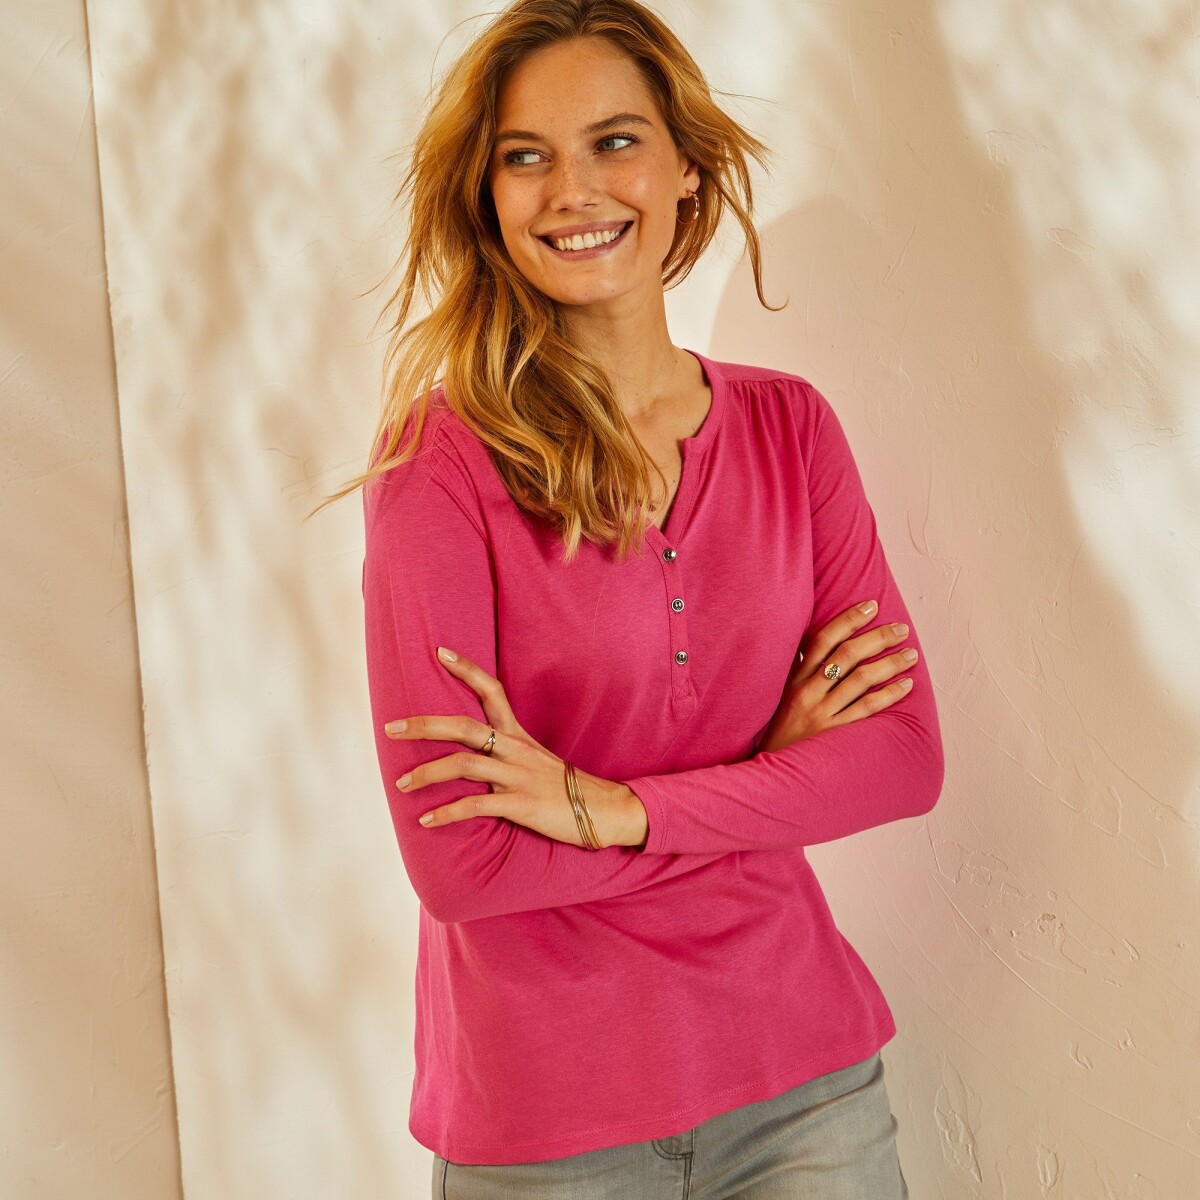 Jednobarevné tričko s tuniským výstřihem a dlouhými rukávy